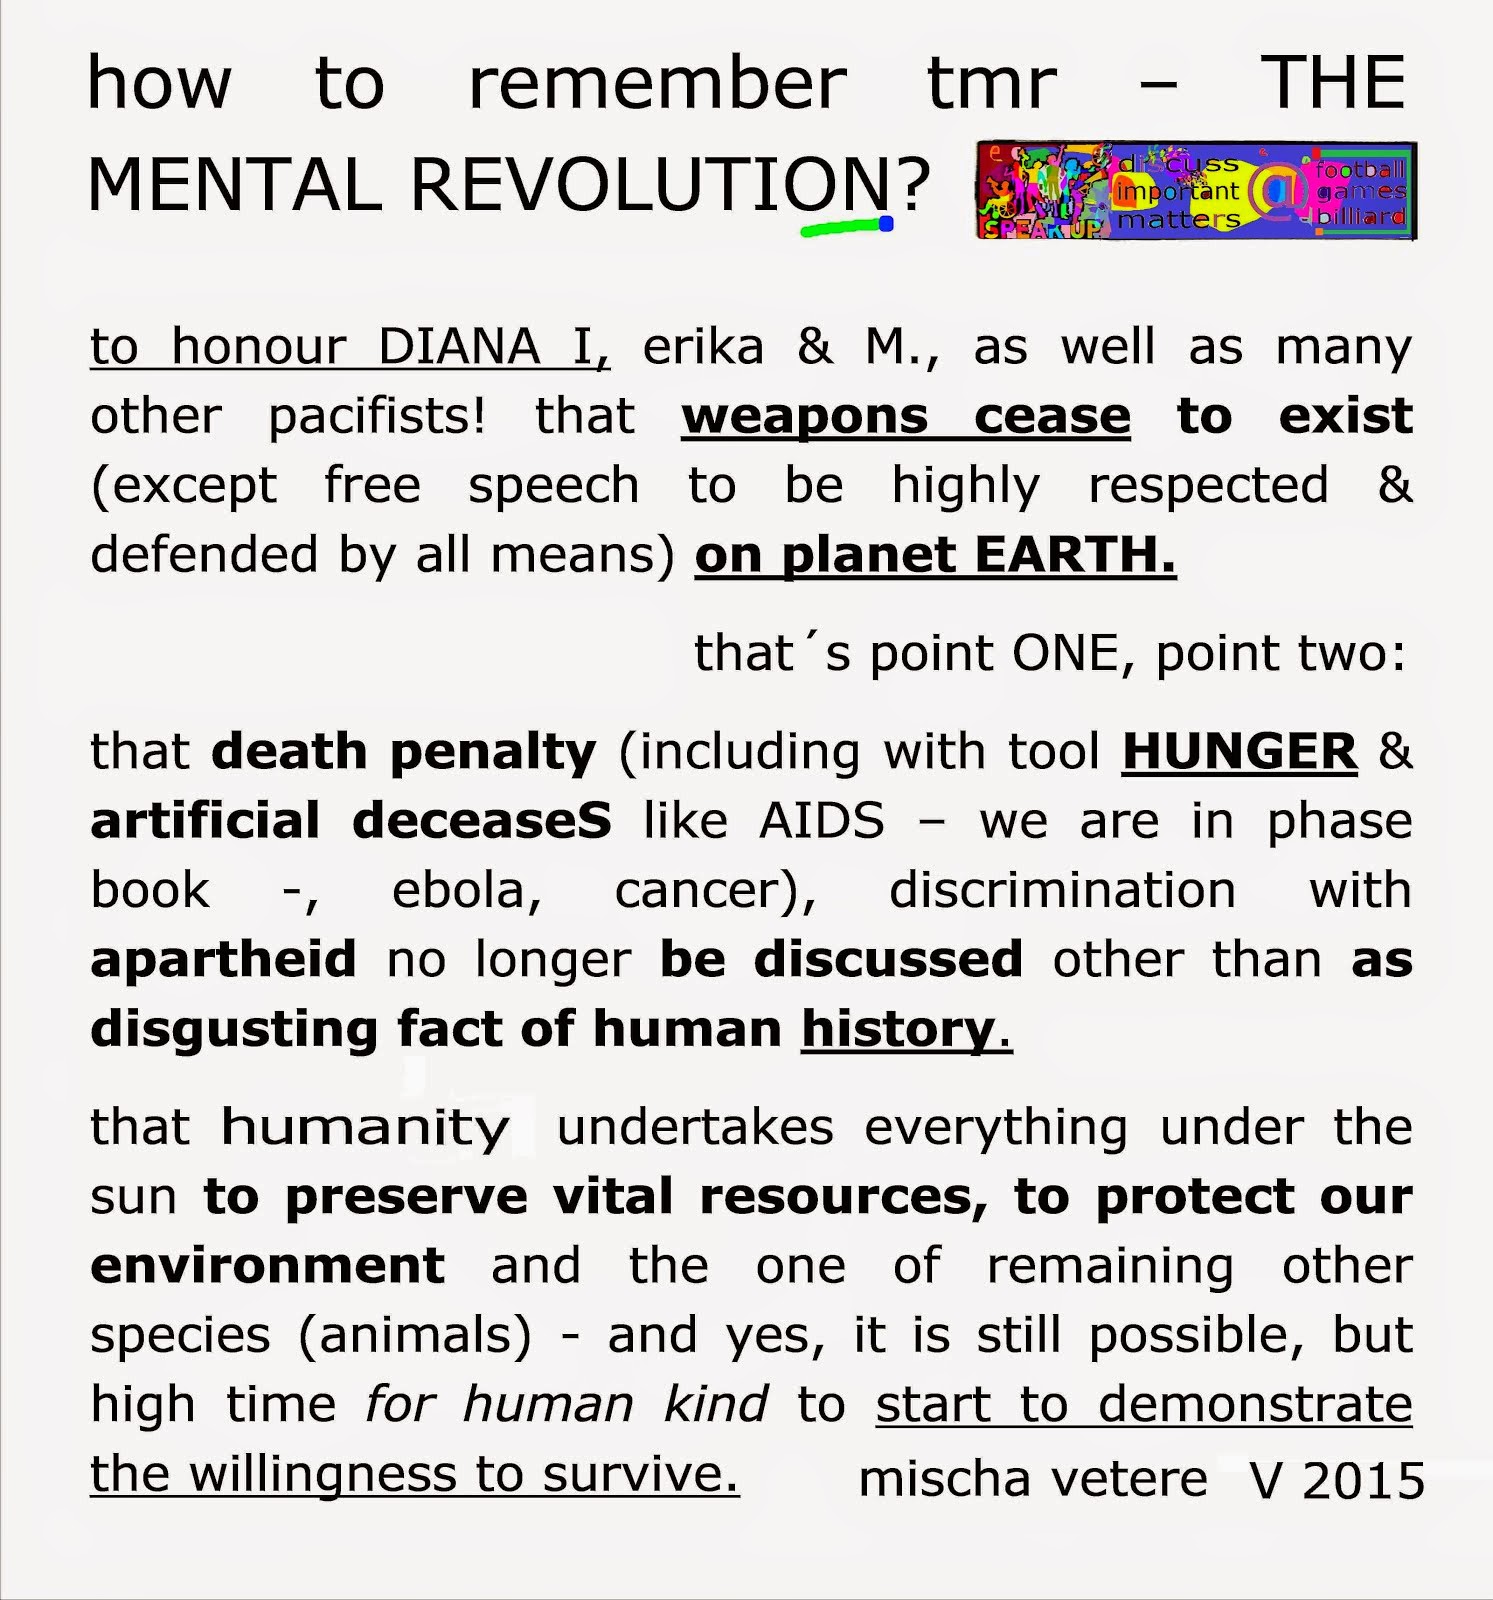 princess diana mines TMR THE MENTAL REVOLUTION mischa vetere HUNGER obama princes rainforest